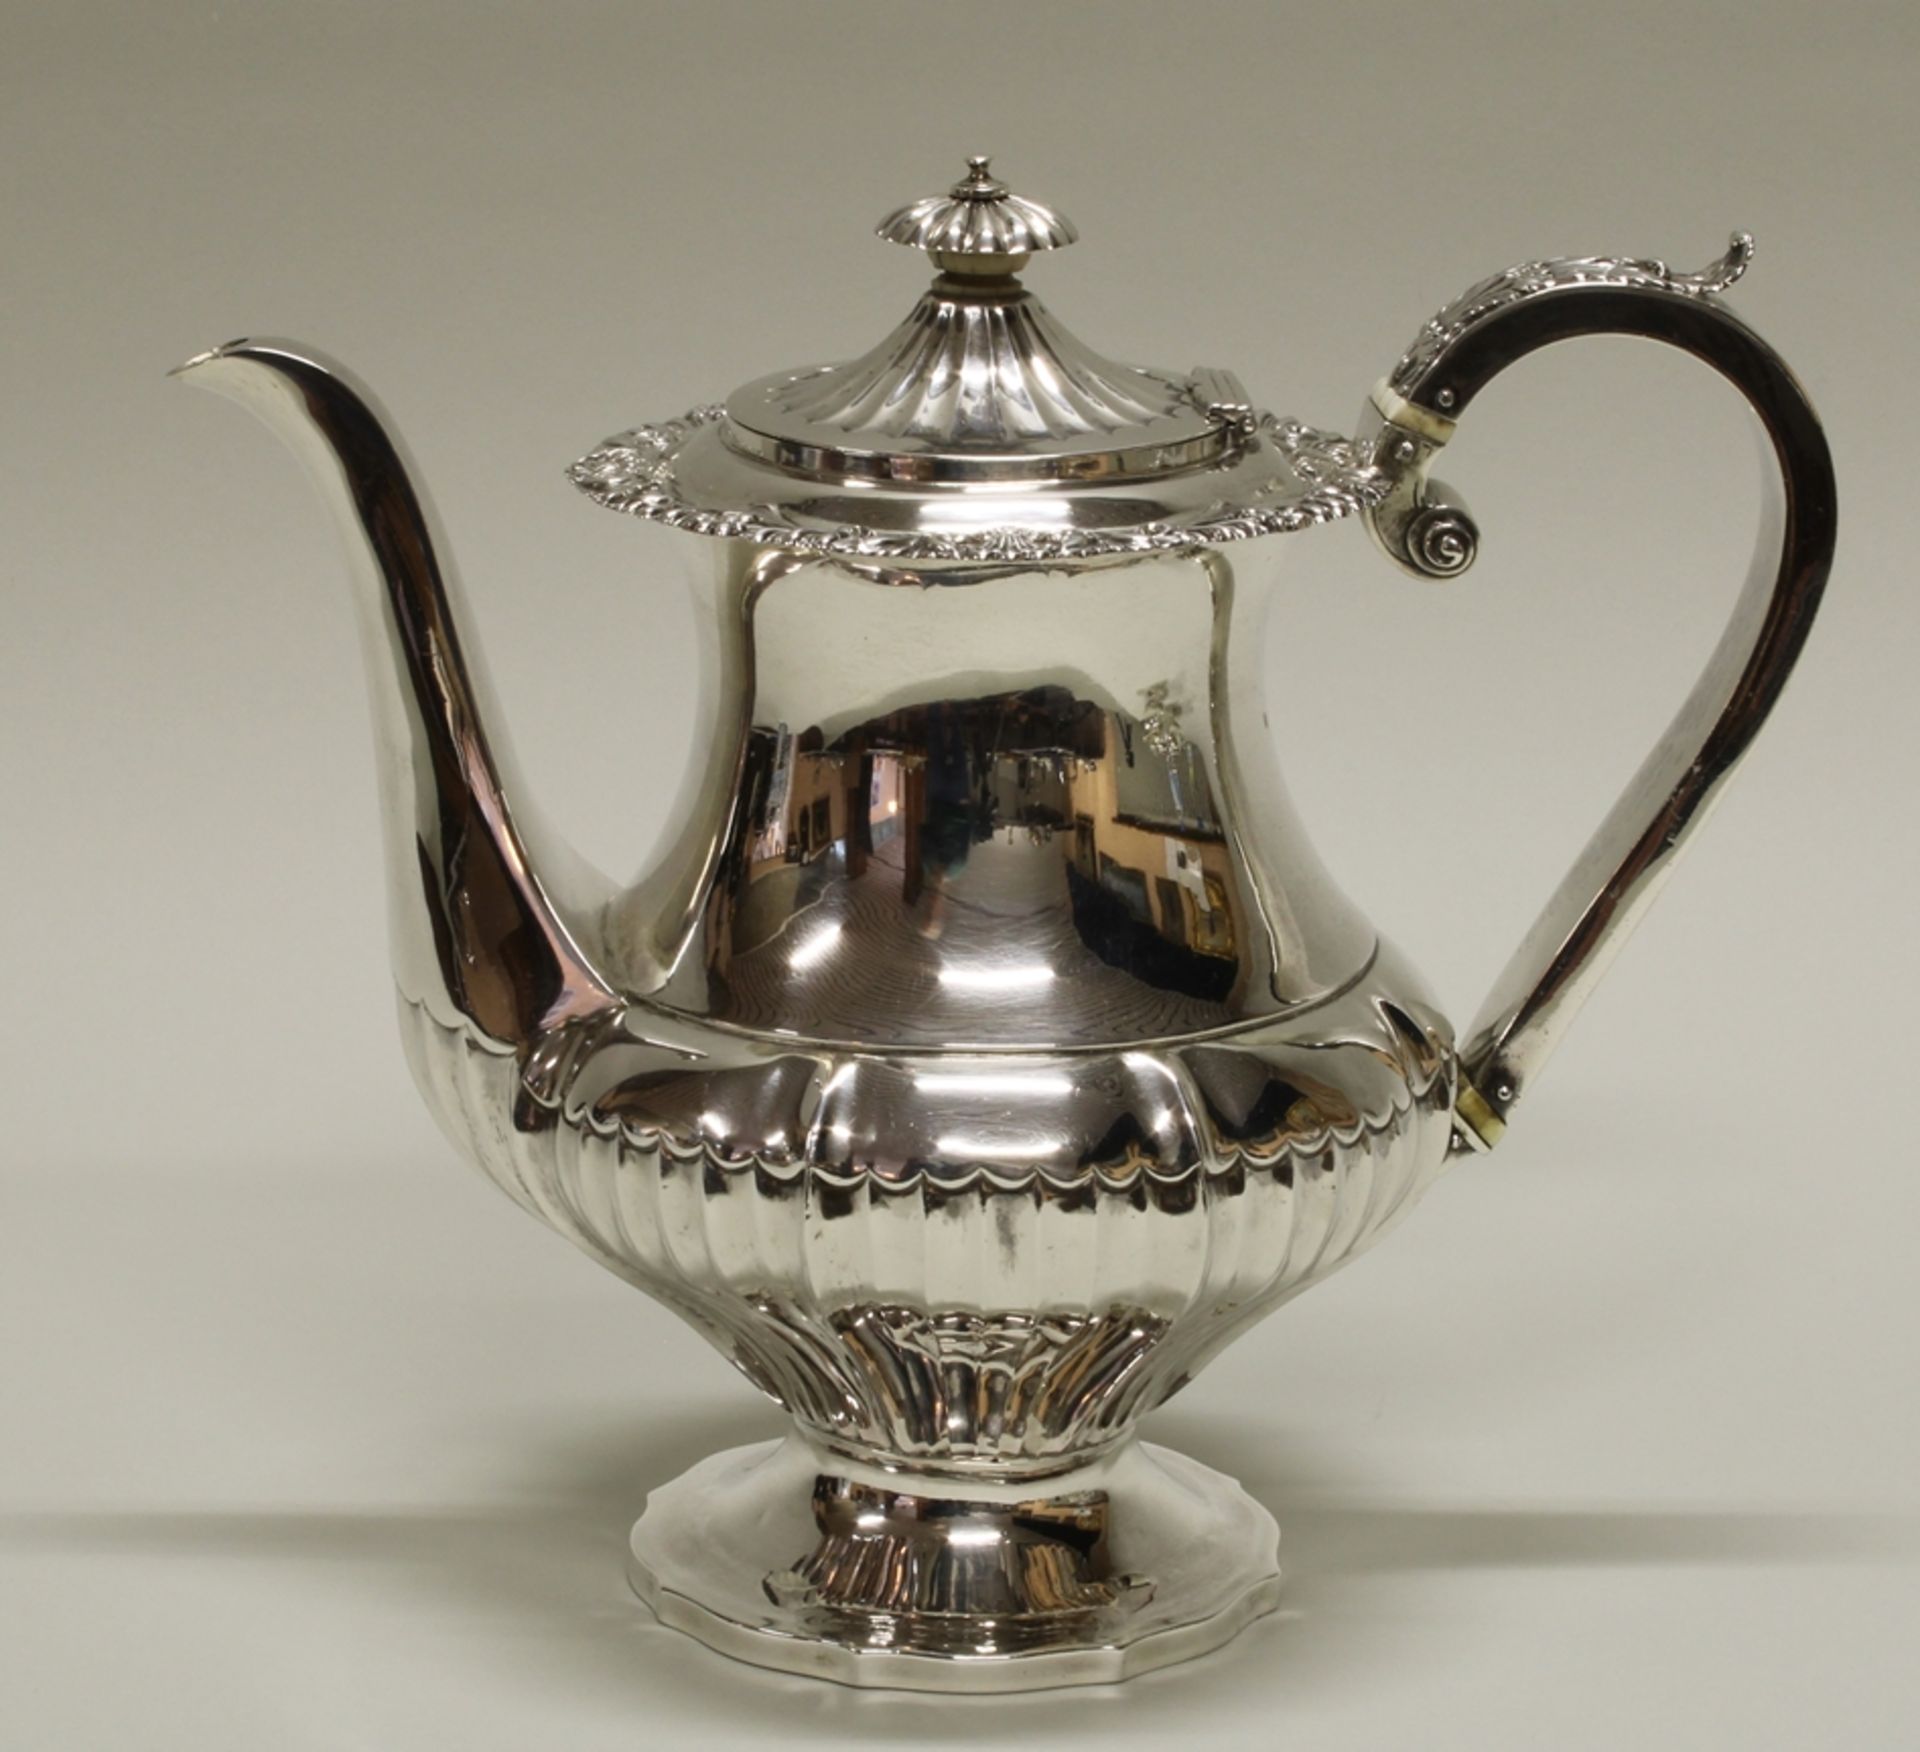 Kaffee- und Teeservice, 4-tlg., Silber 925, London, 1825/26, Edward Barton, teils innen vergoldet,  - Bild 2 aus 4